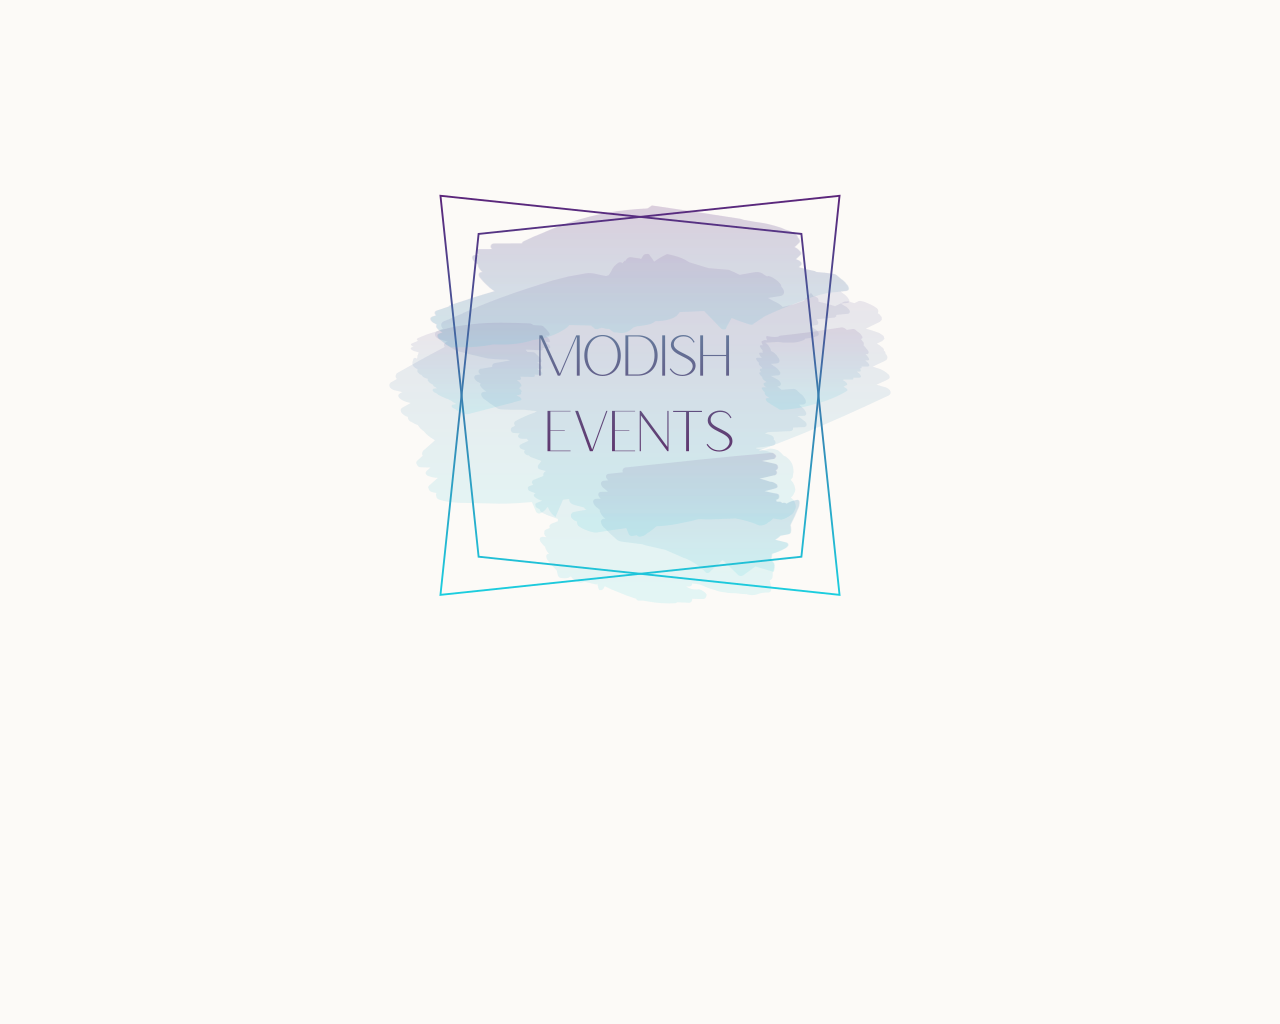 Modish Events logo